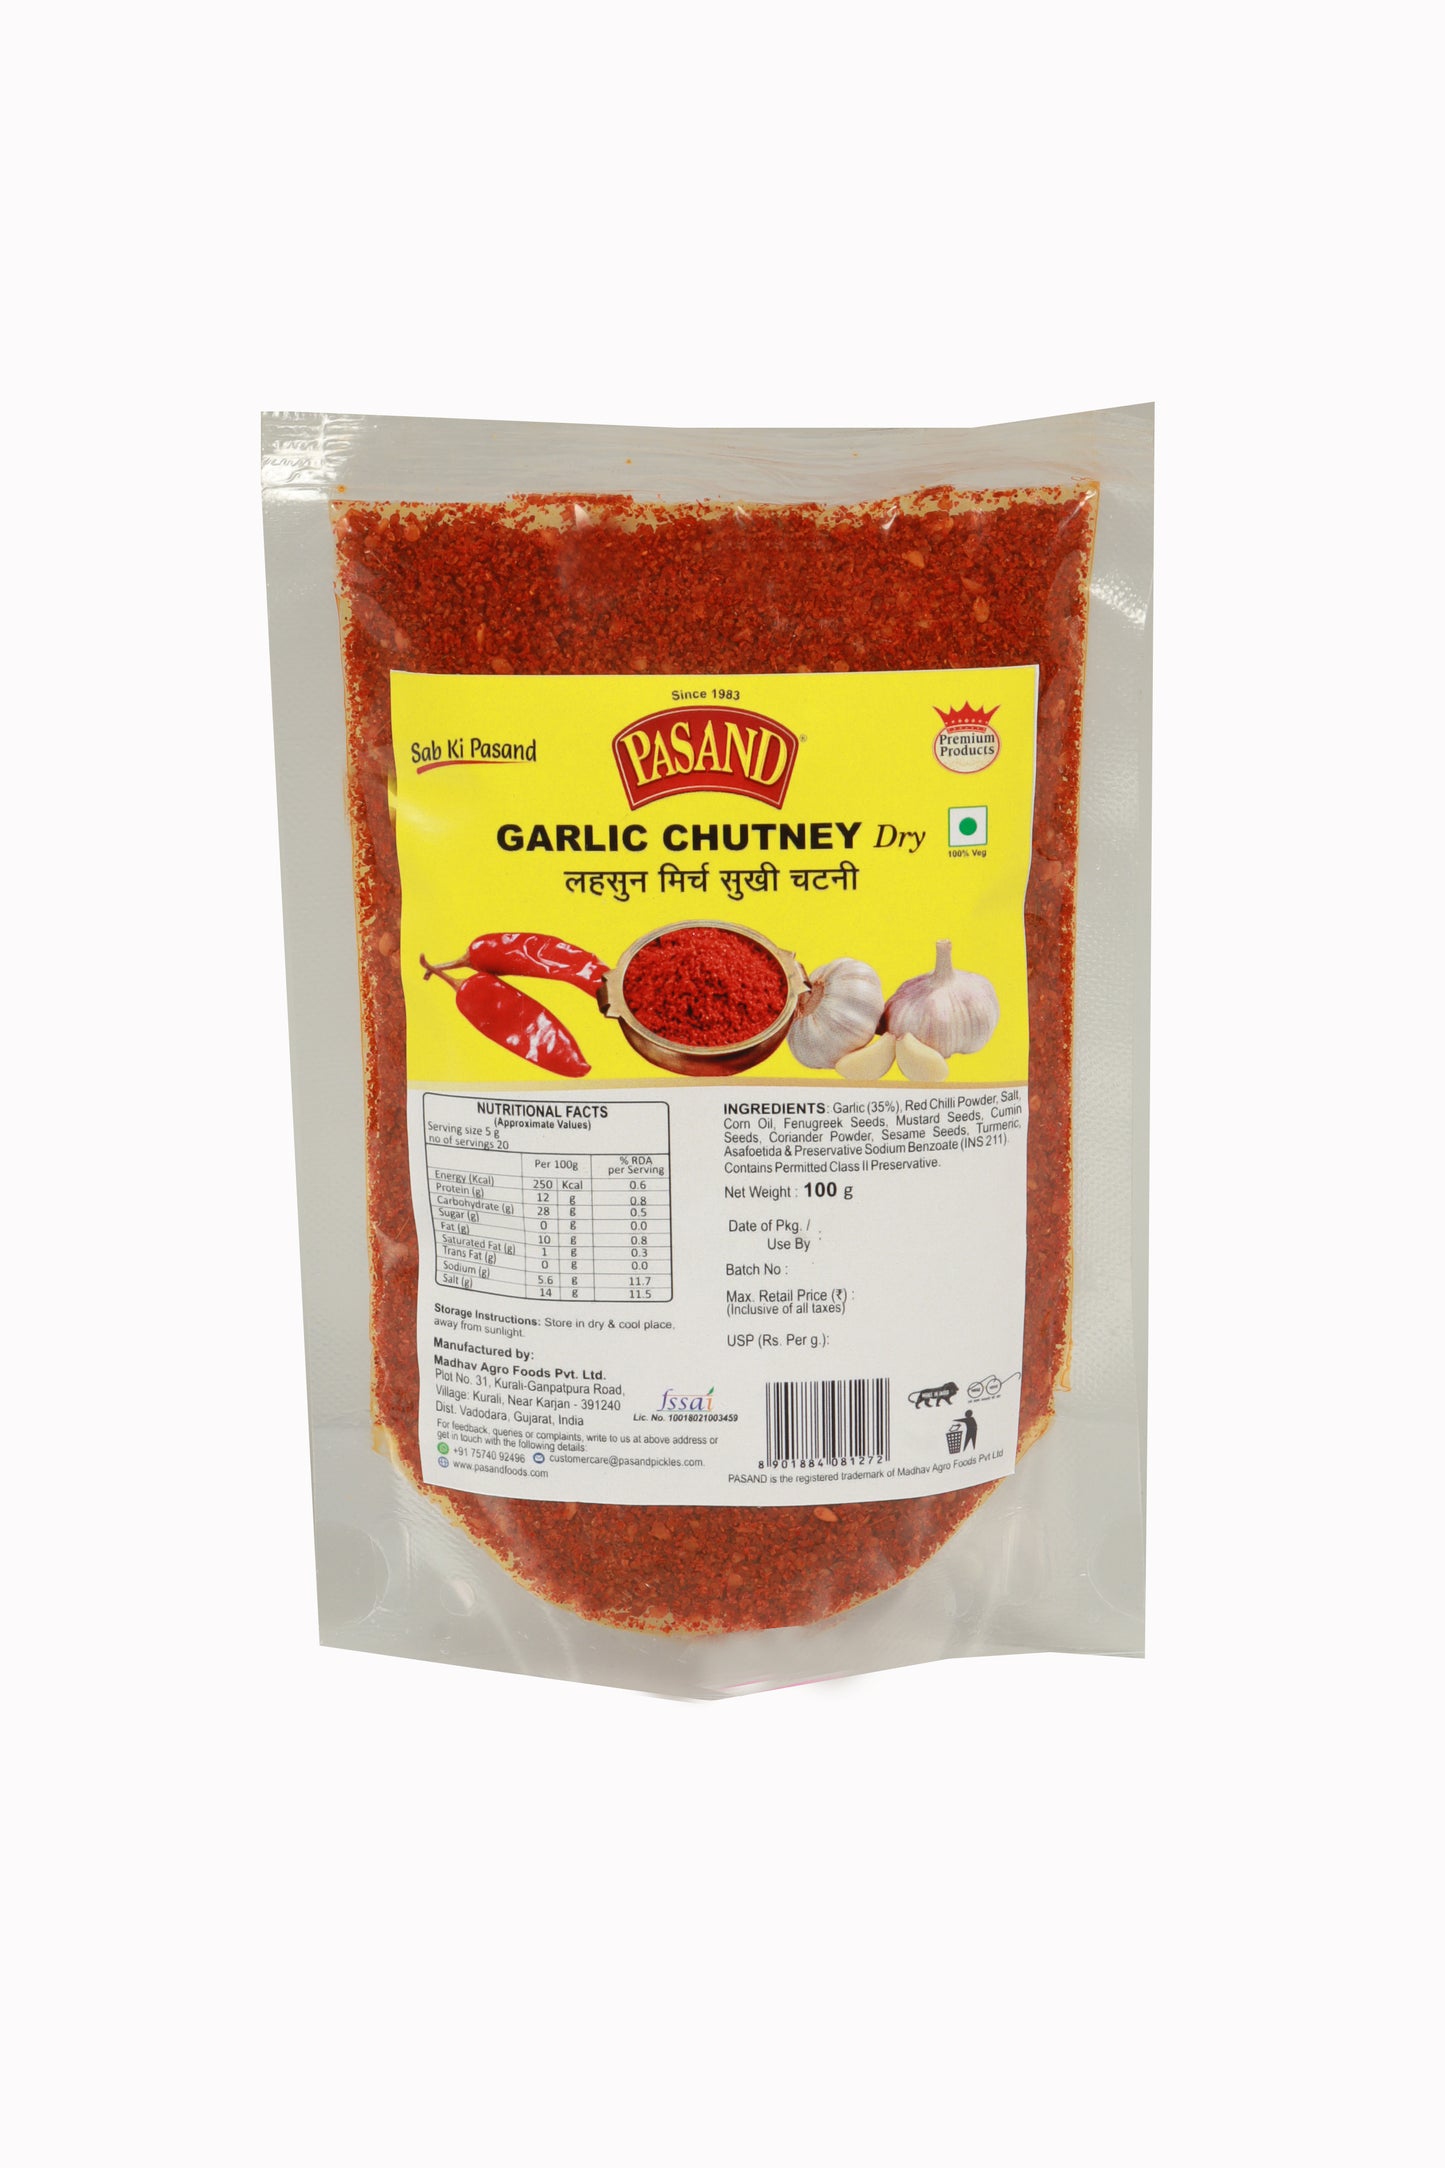 Garlic chutney powder